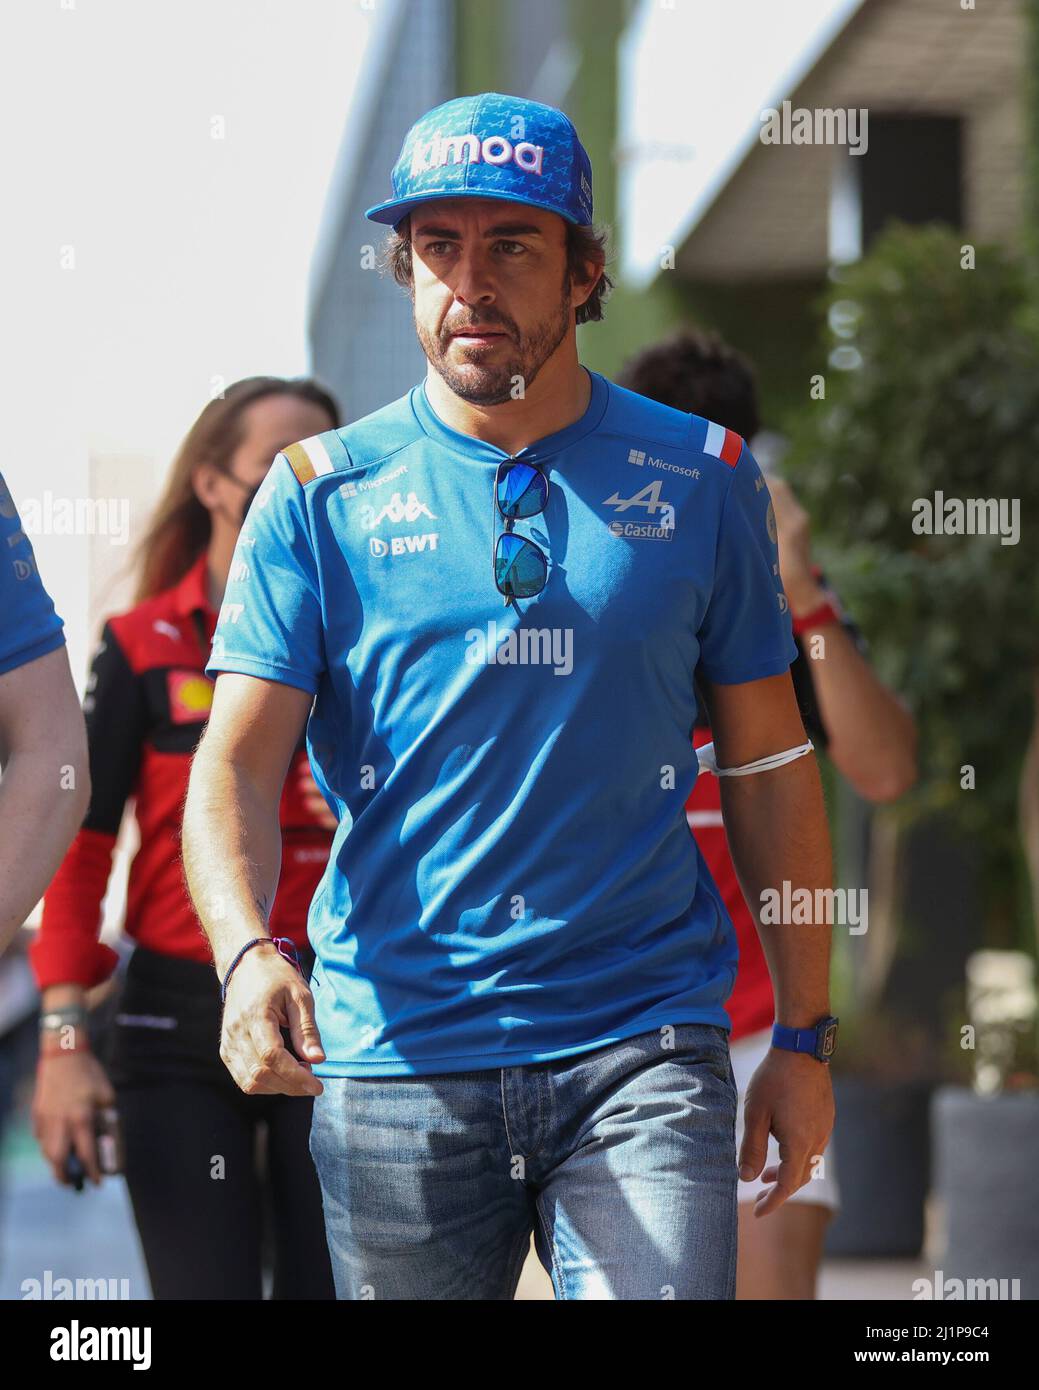 14 Fernando Alonso (ESP, BWT Alpine F1 Team), Grand Prix d'Arabie Saoudite  F1 sur le